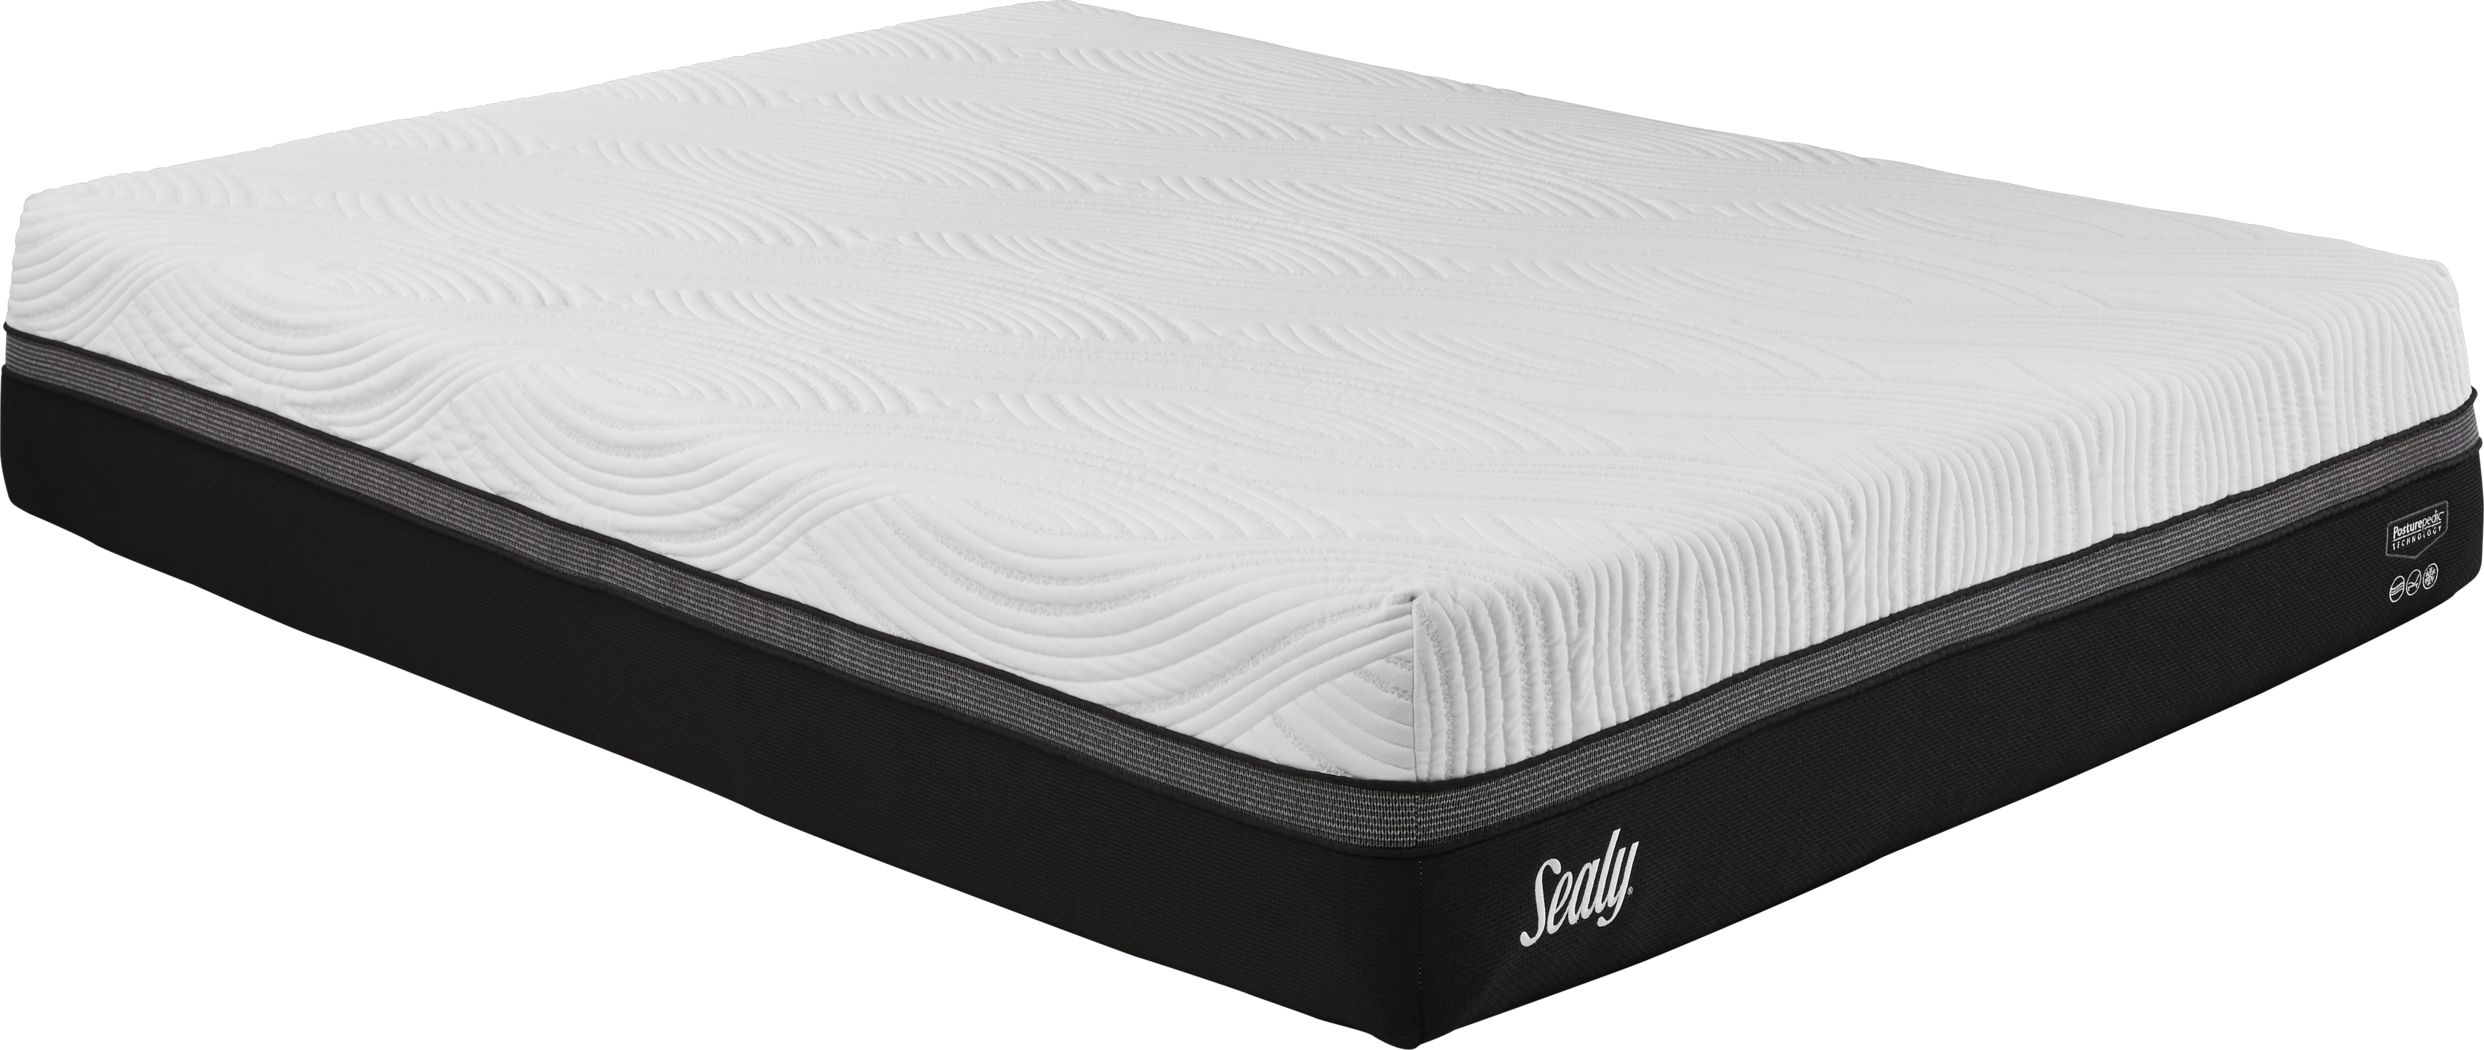 sealy wondrous king mattress reviews